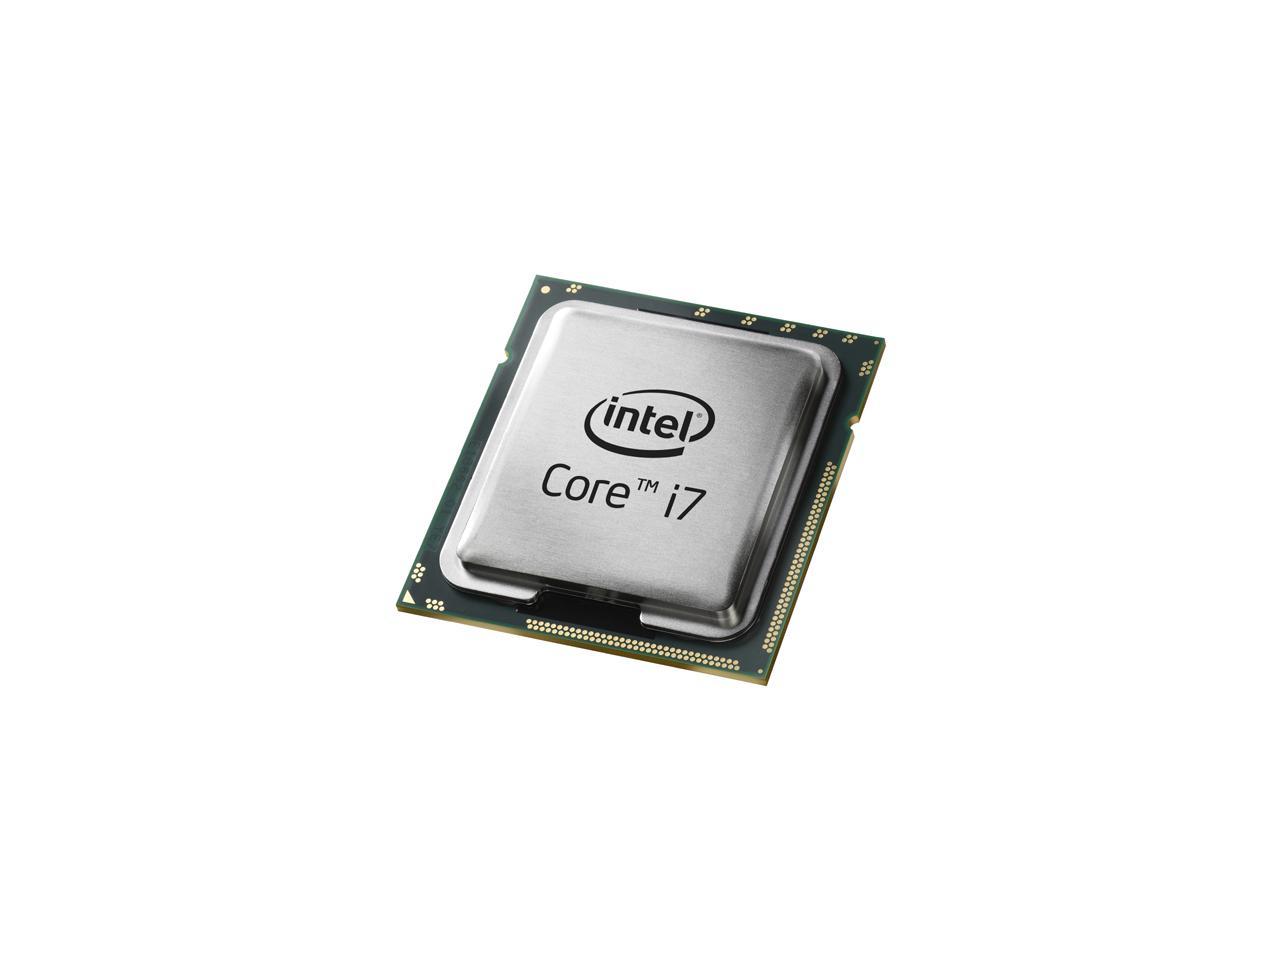 1.3 ггц. Intel Core i3 550. Процессор Intel Core i7 3400 МГЦ. Intel Core Pentium inside. I3 2105.